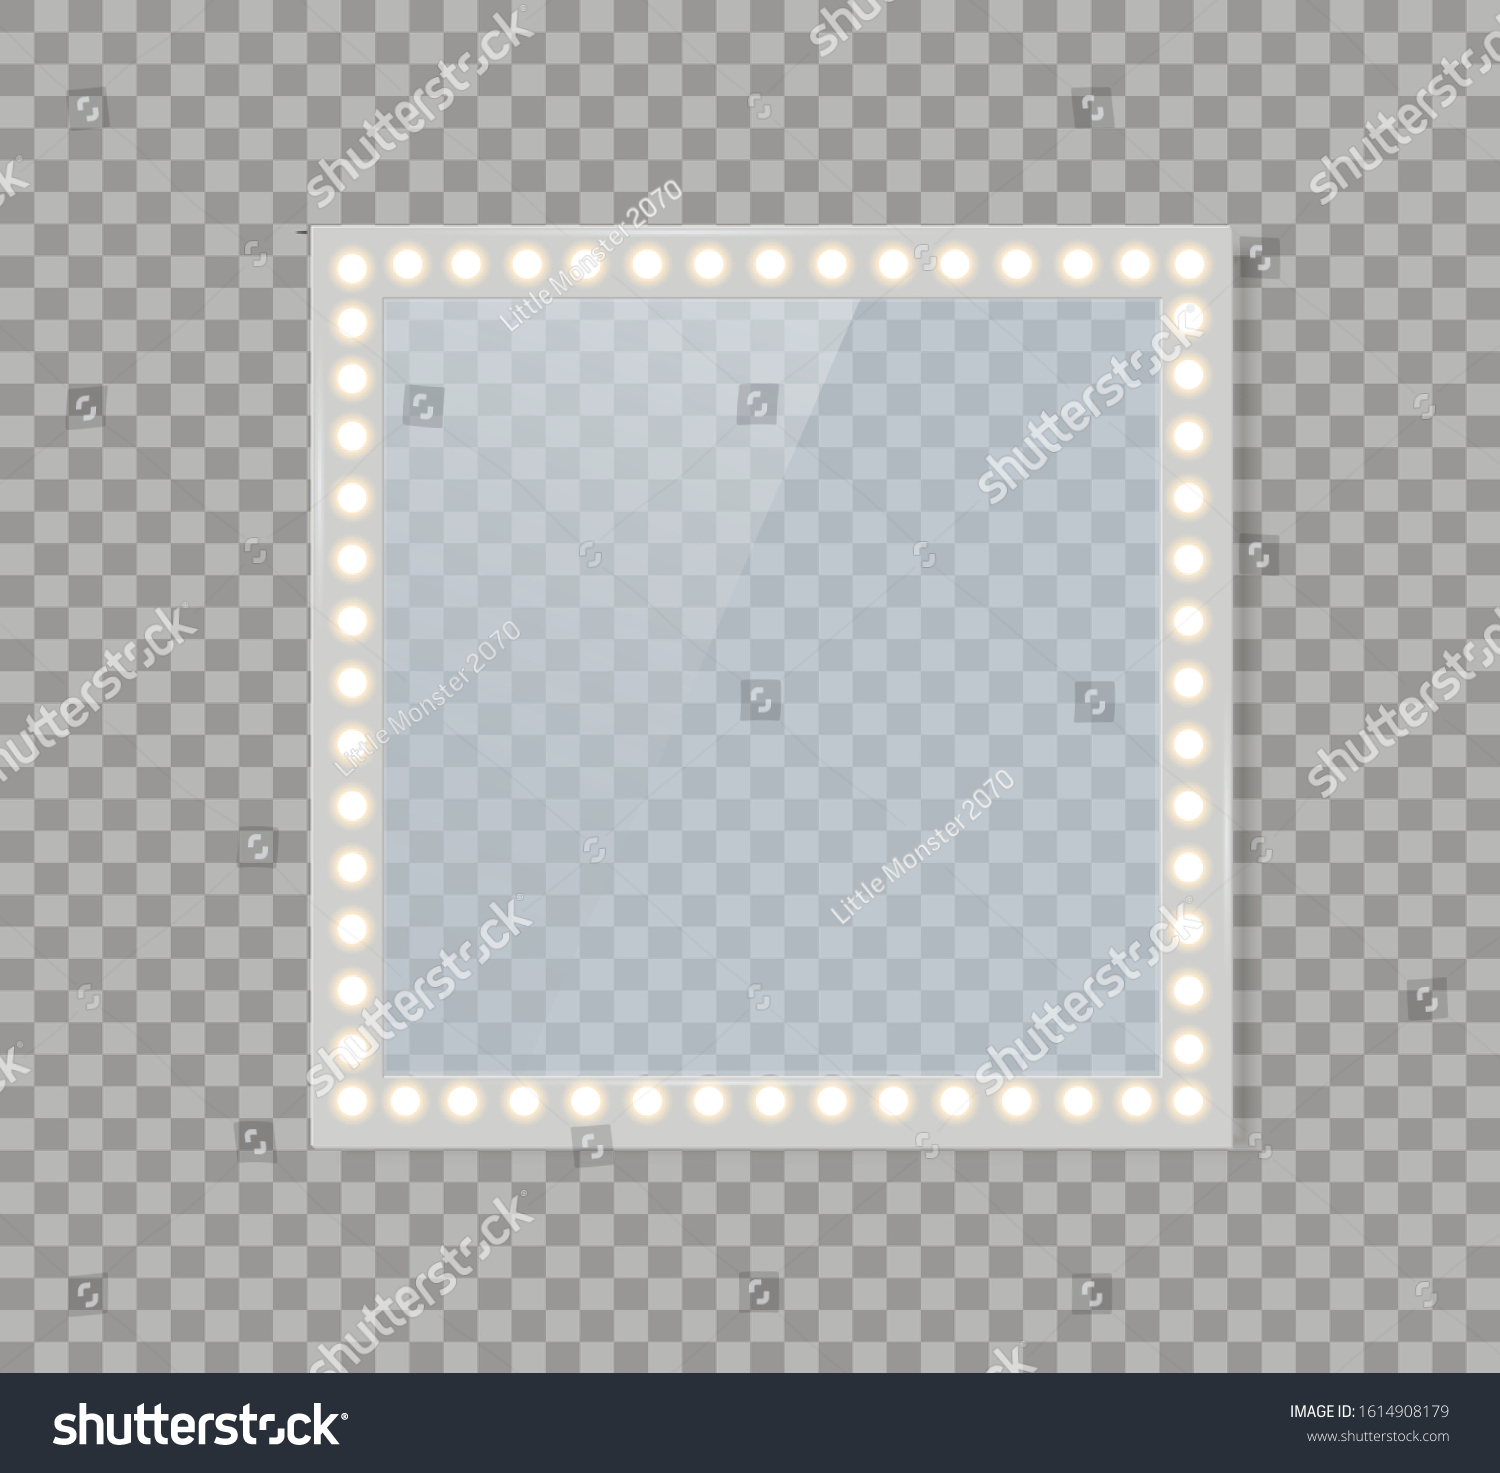 SVG of Mirror in frame with bright lights with light makeup lights in changing room or backroom. Vector illustration, EPS 10. svg